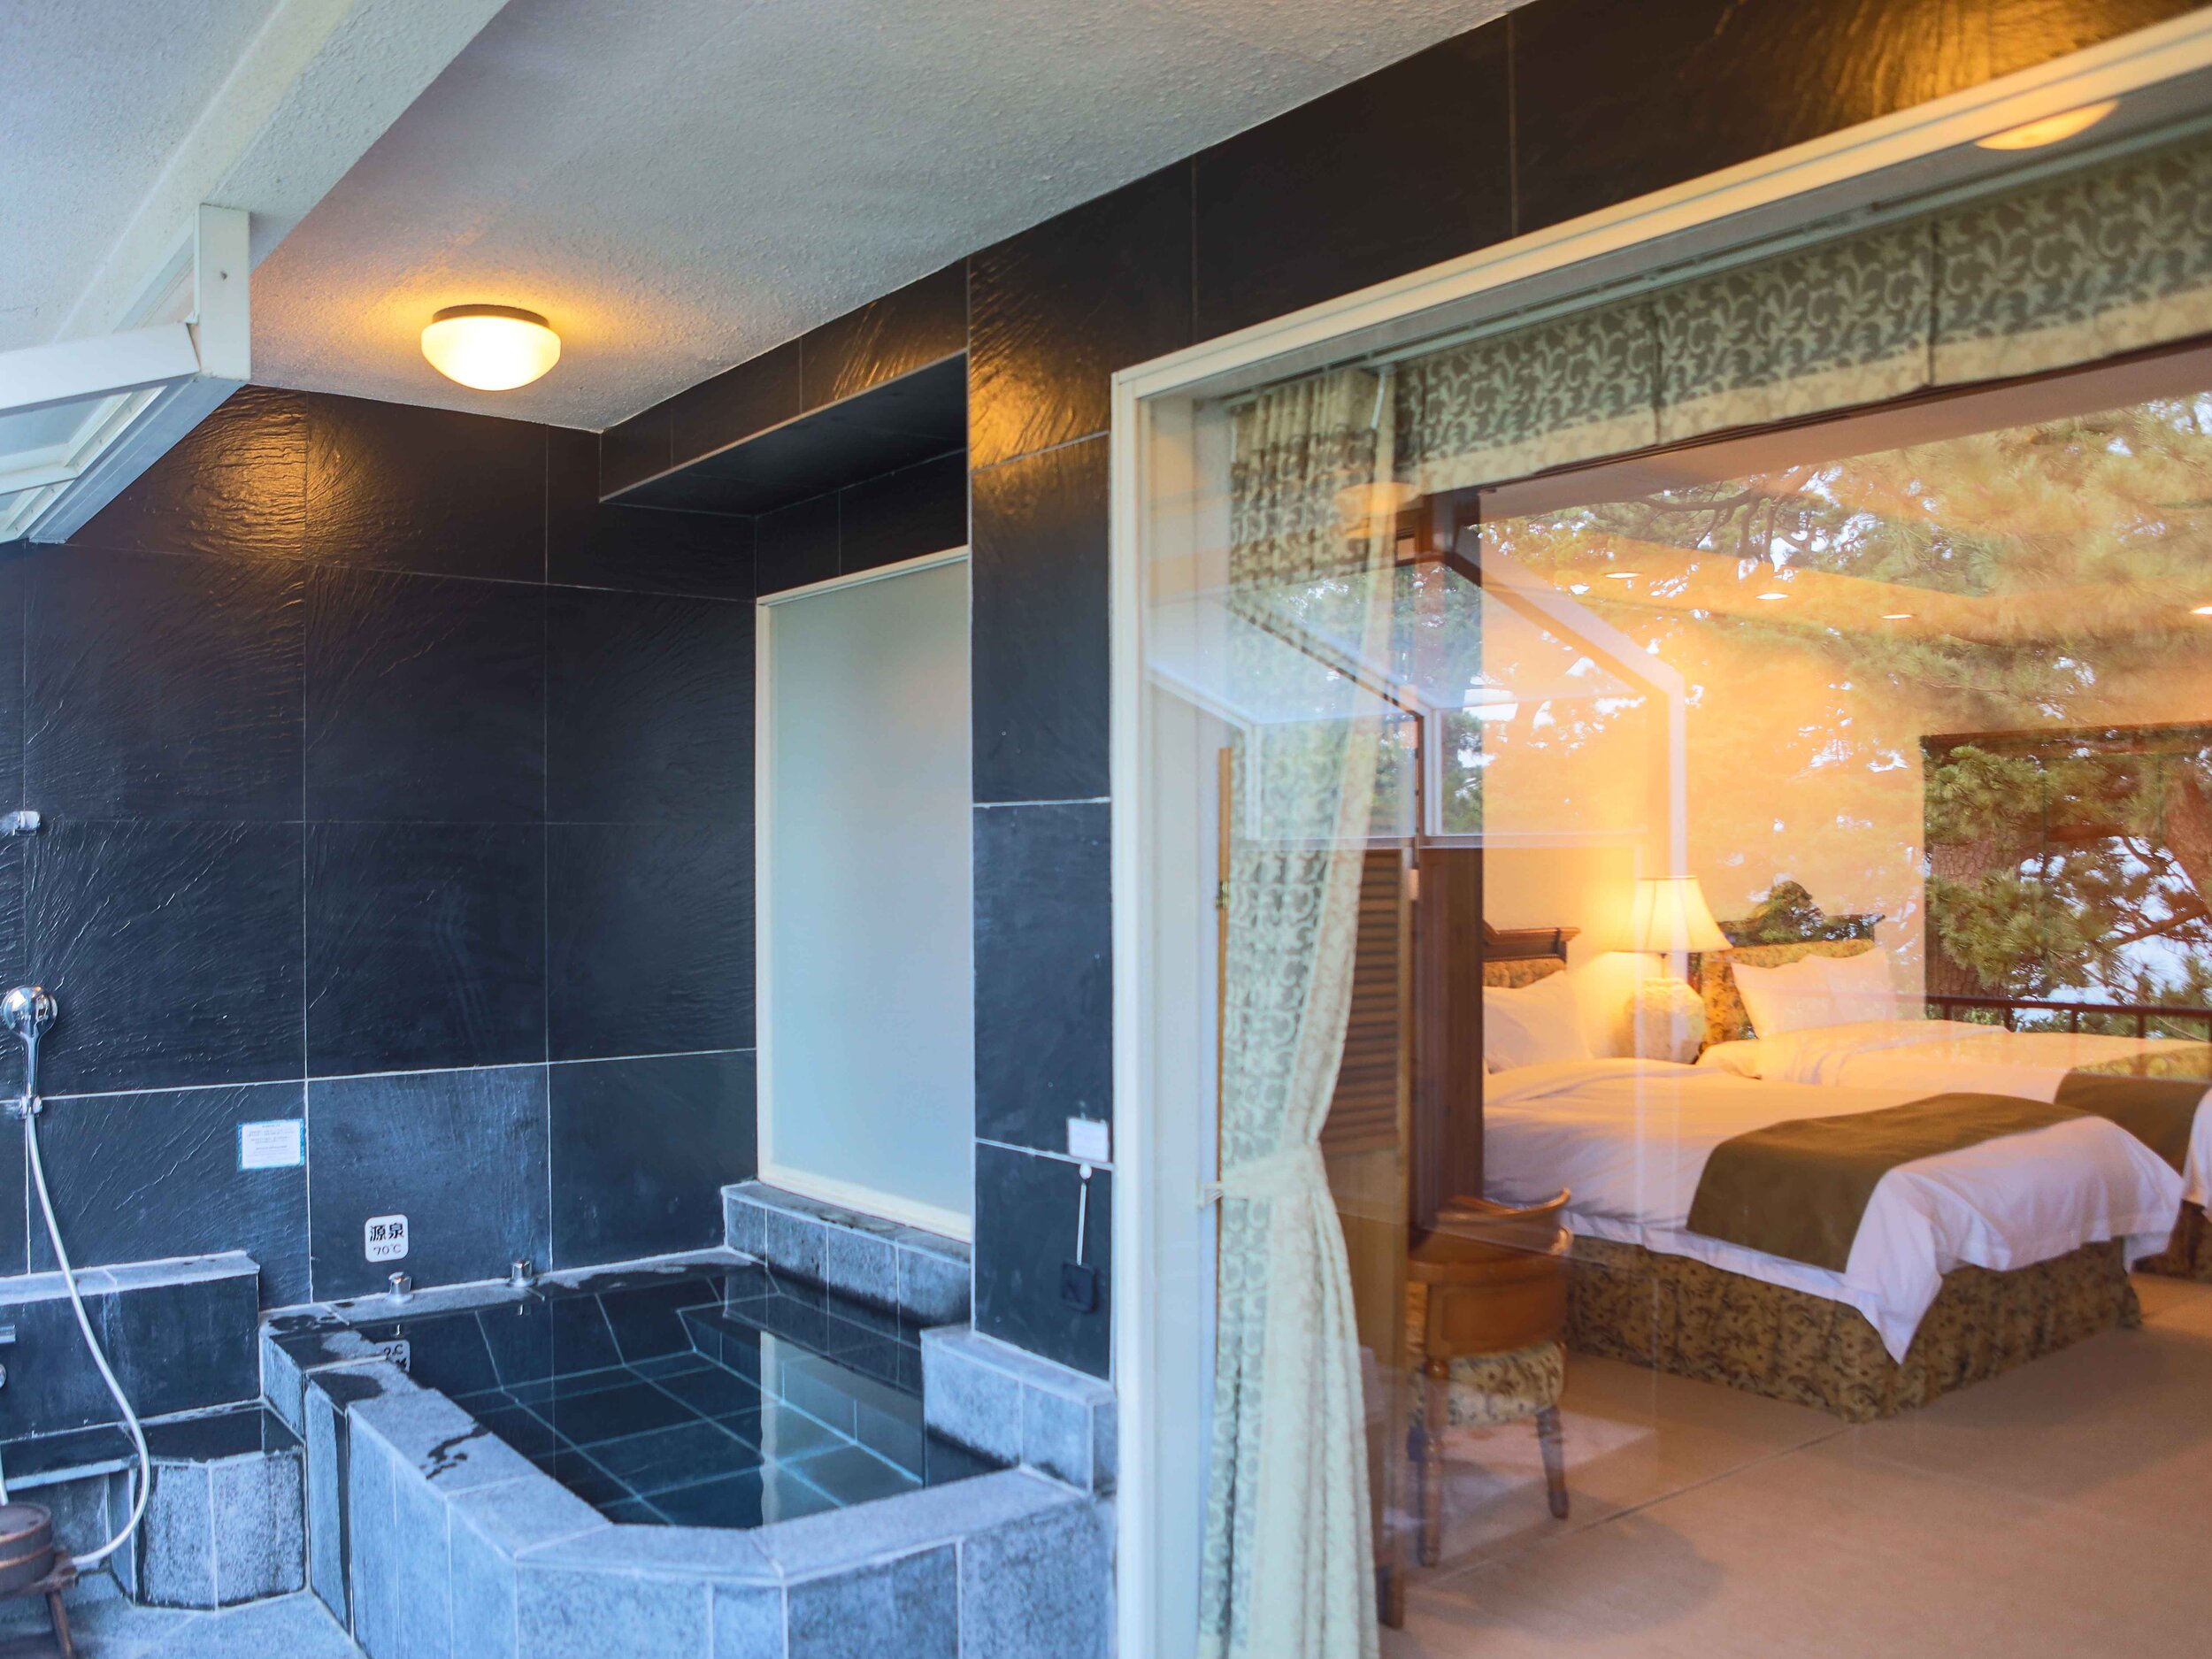 Premier Suite Bath and room.jpg